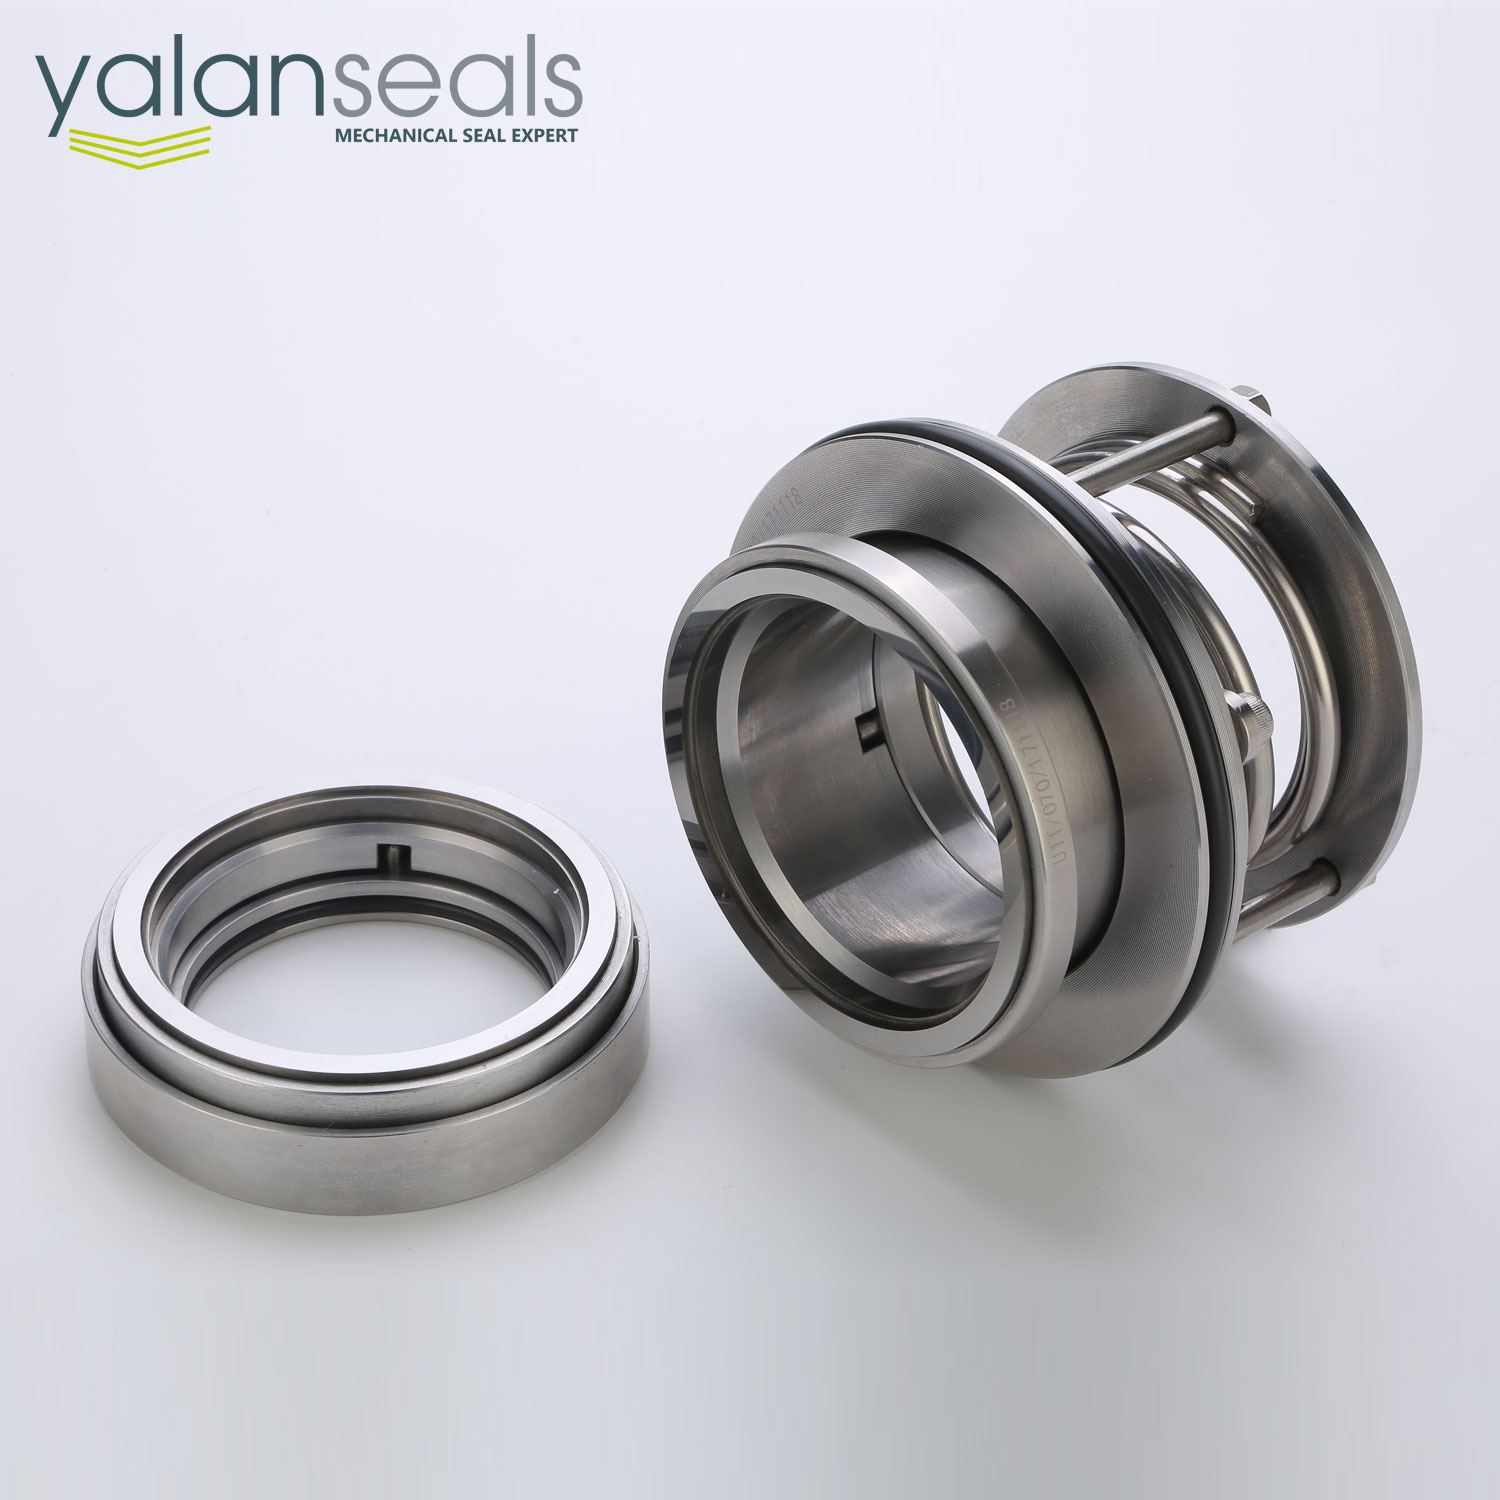 YALAN B173 Mechanical Seal for Slurry Pumps